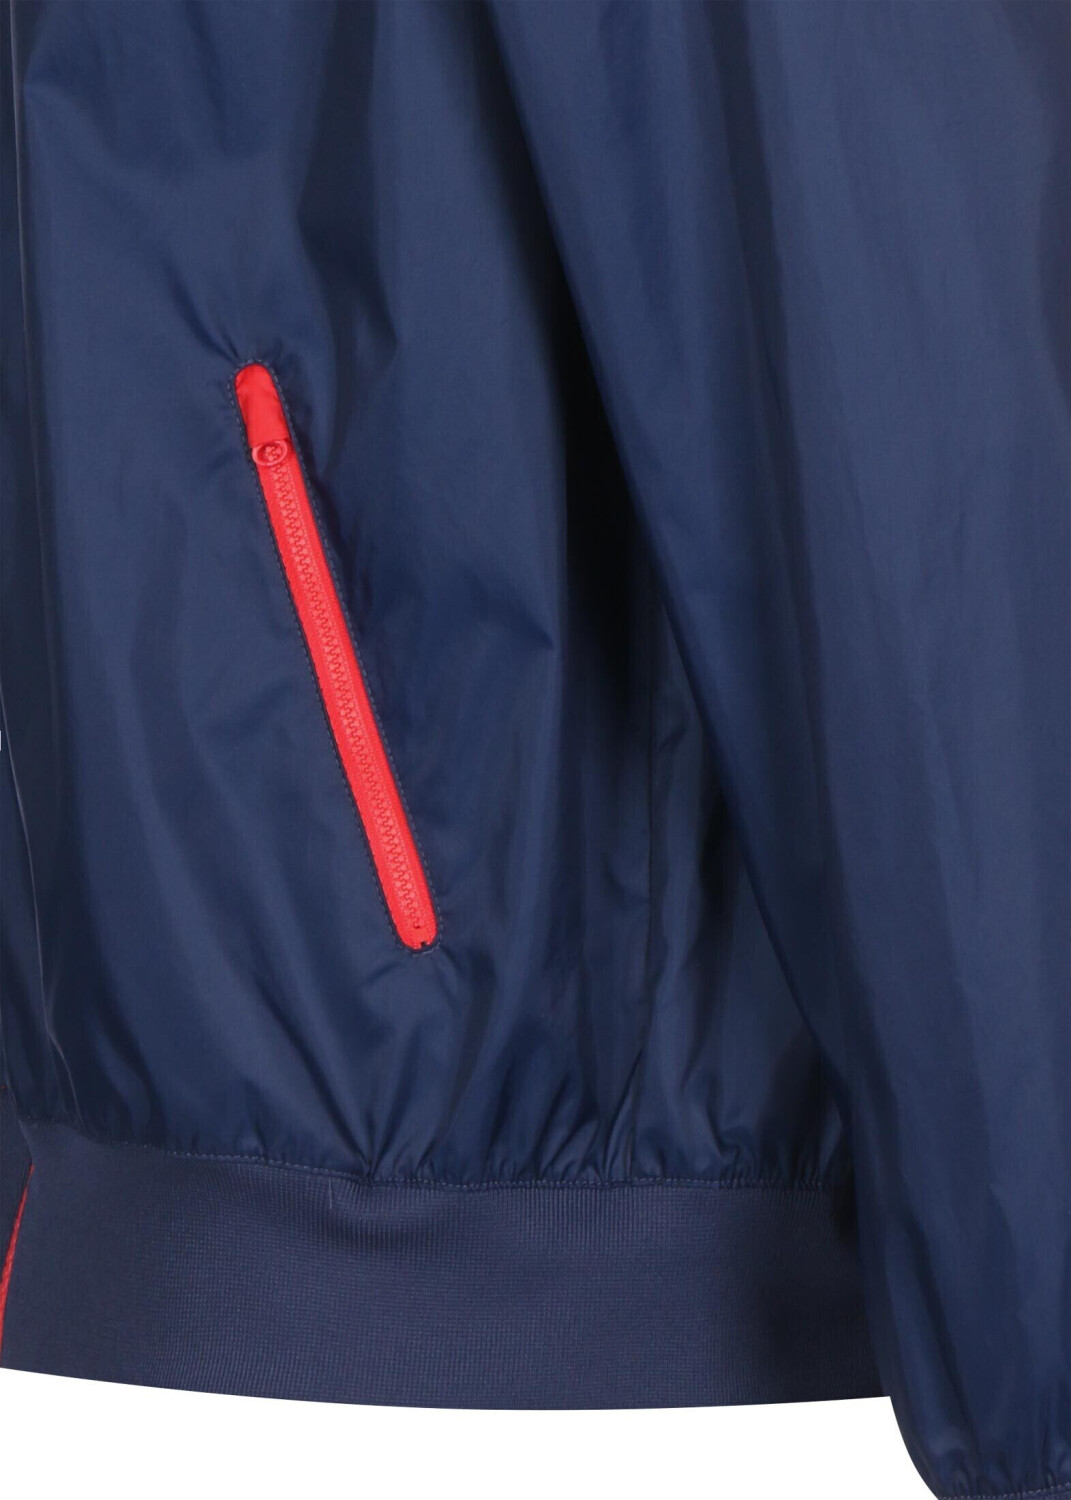 Nike Windrunner Jacket DA0001-013 Tall Sportswear Blue Black Red Ice Green  Long